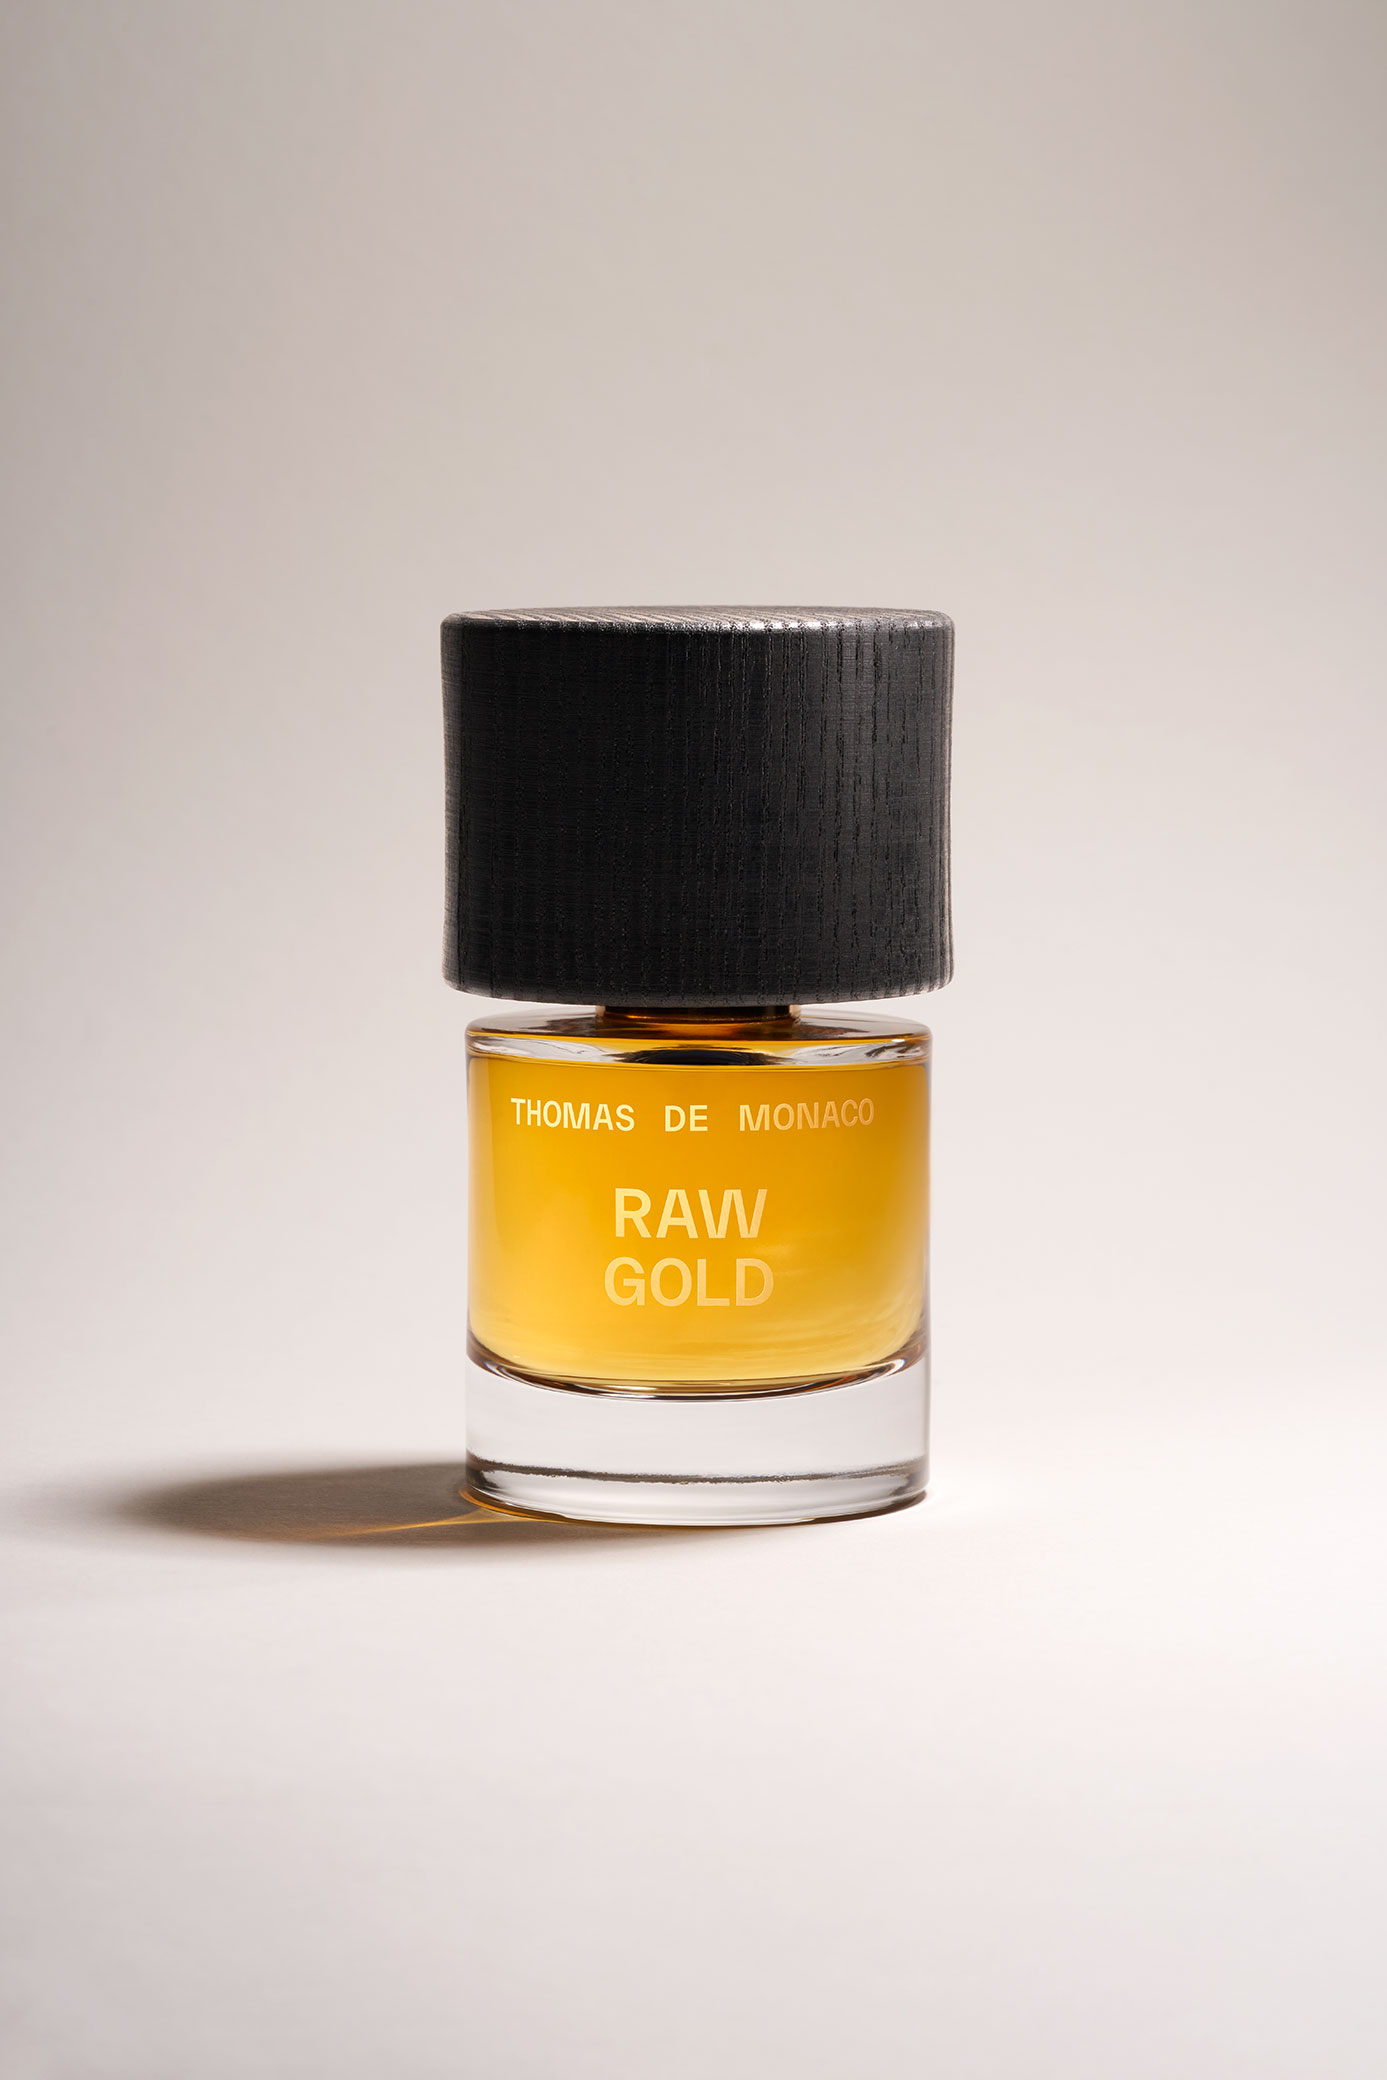 Thomas de Monaco - Raw Gold - Extrait de Parfum